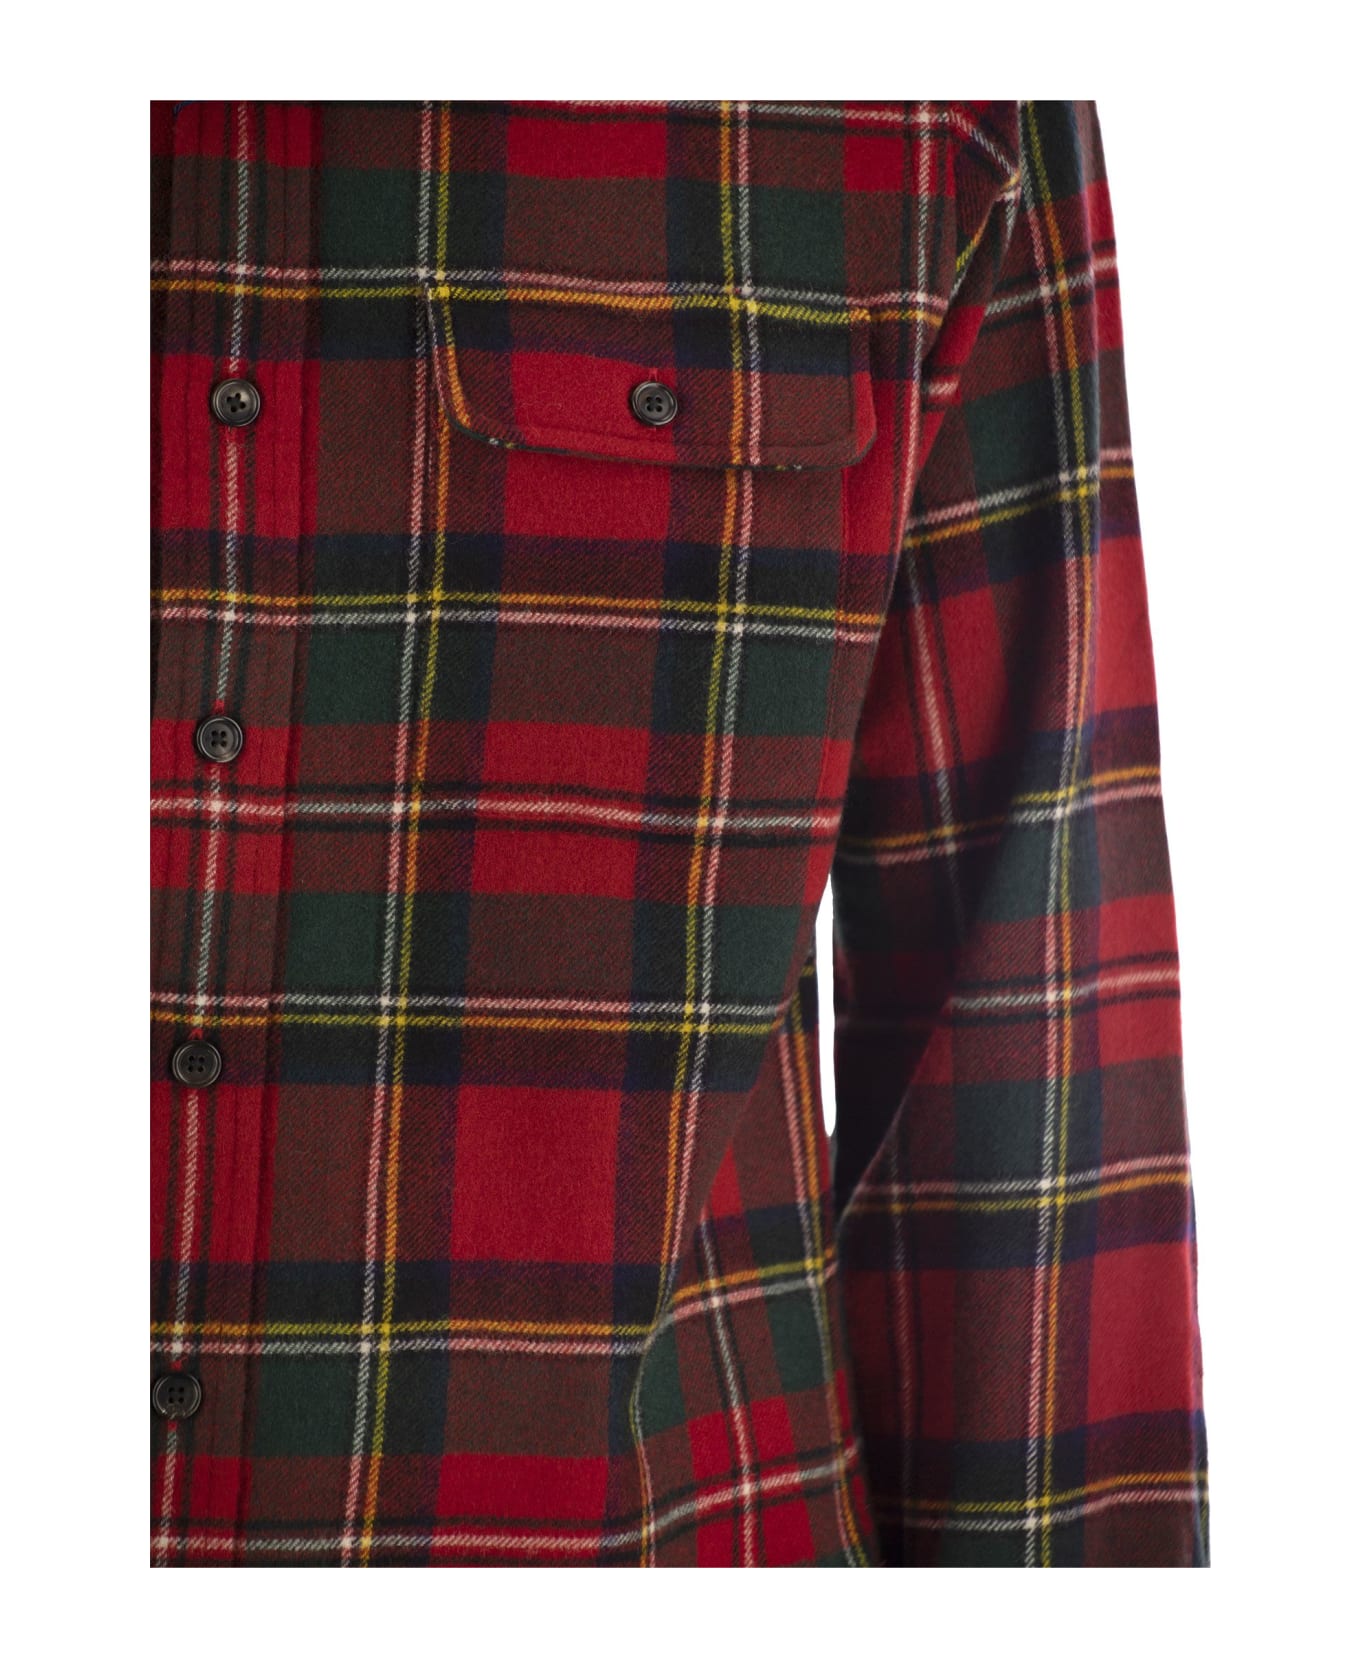 Polo Ralph Lauren Checked Wool Shirt - Red